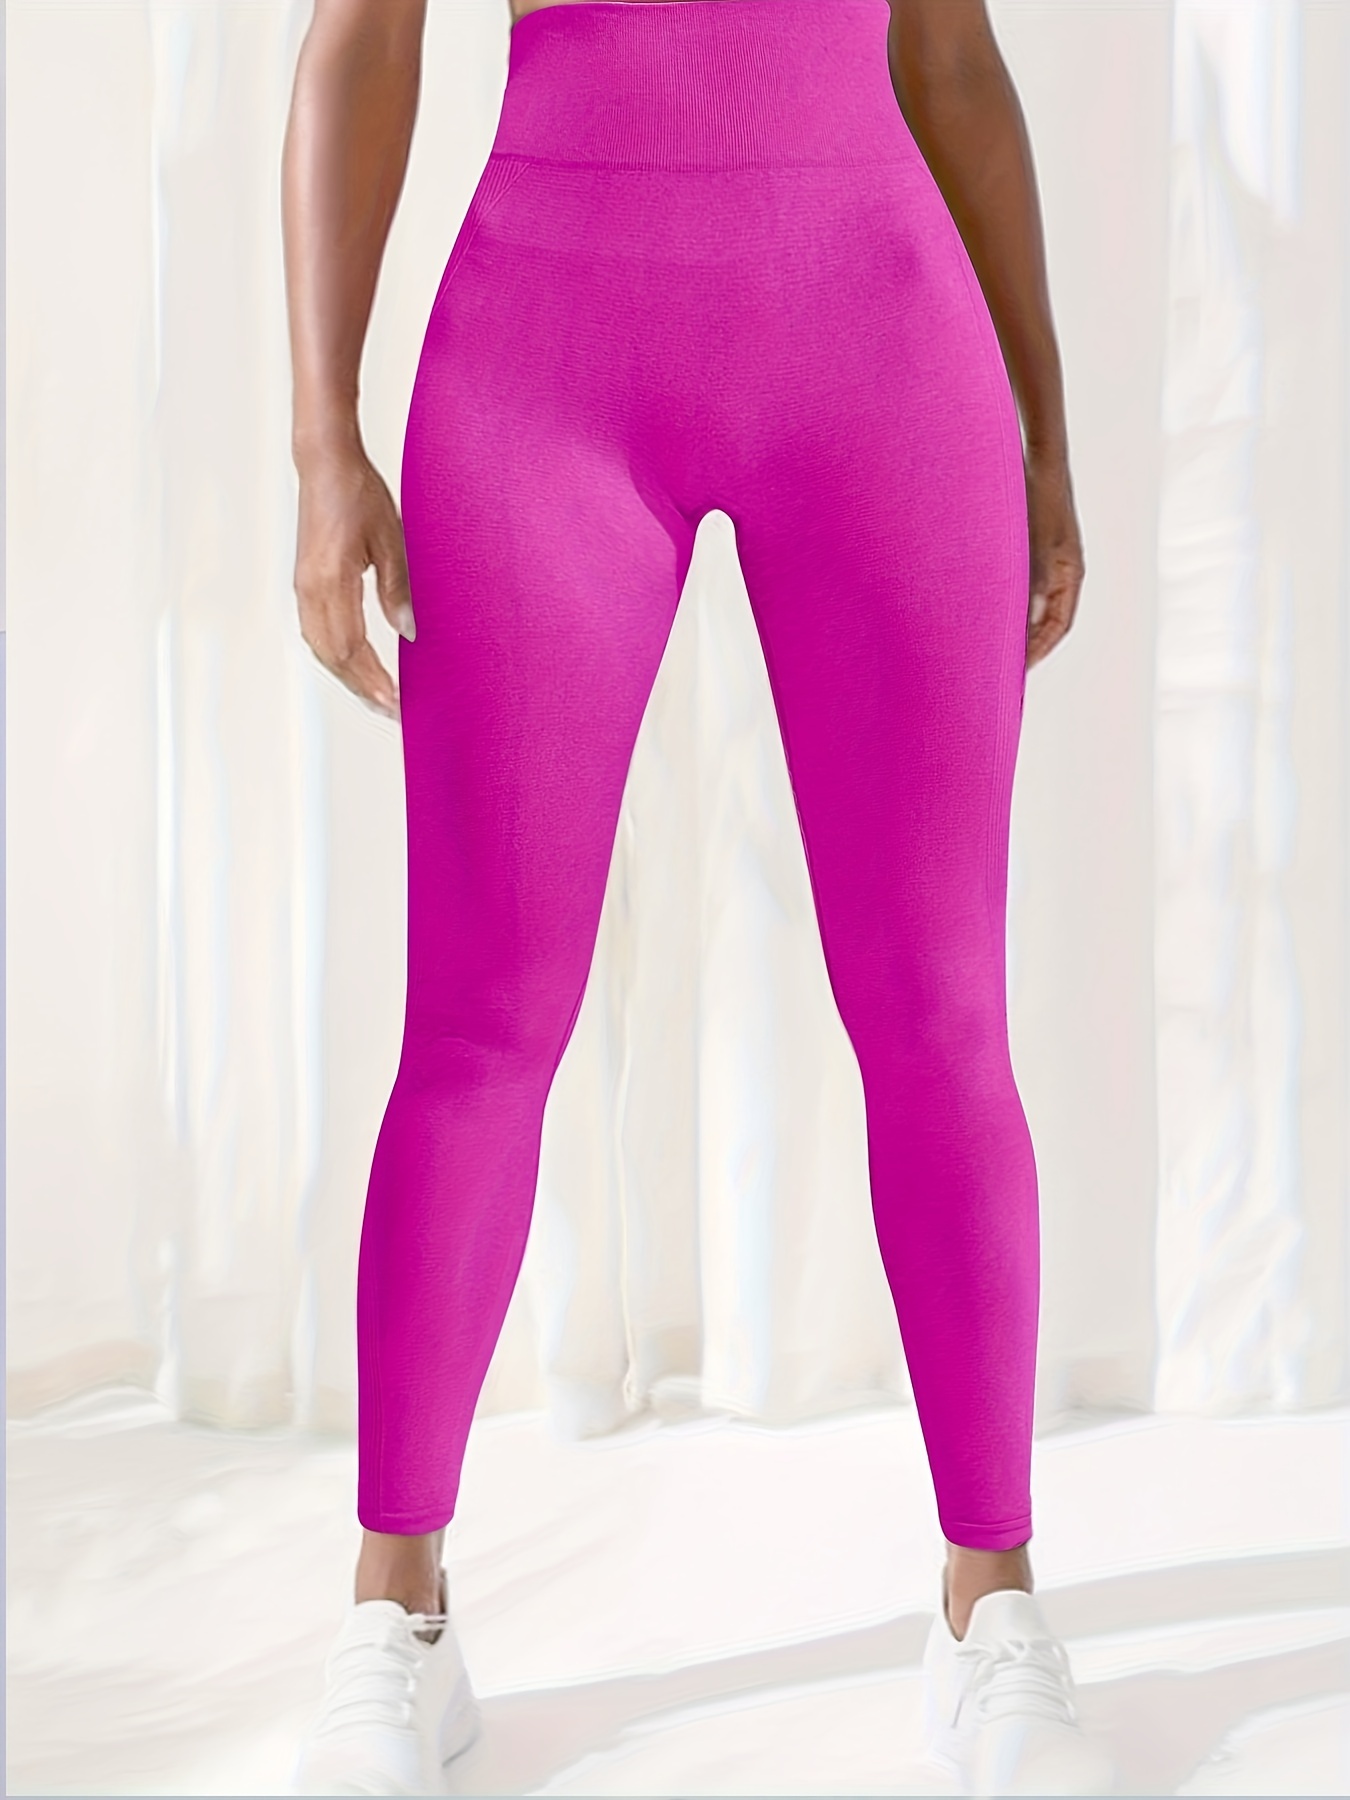 CBGELRT Tie Dye Gradient Color Leggings Women High Waist Push up Seamless  Legging Workout Running Fitness Leggins Women's Pants Pink S